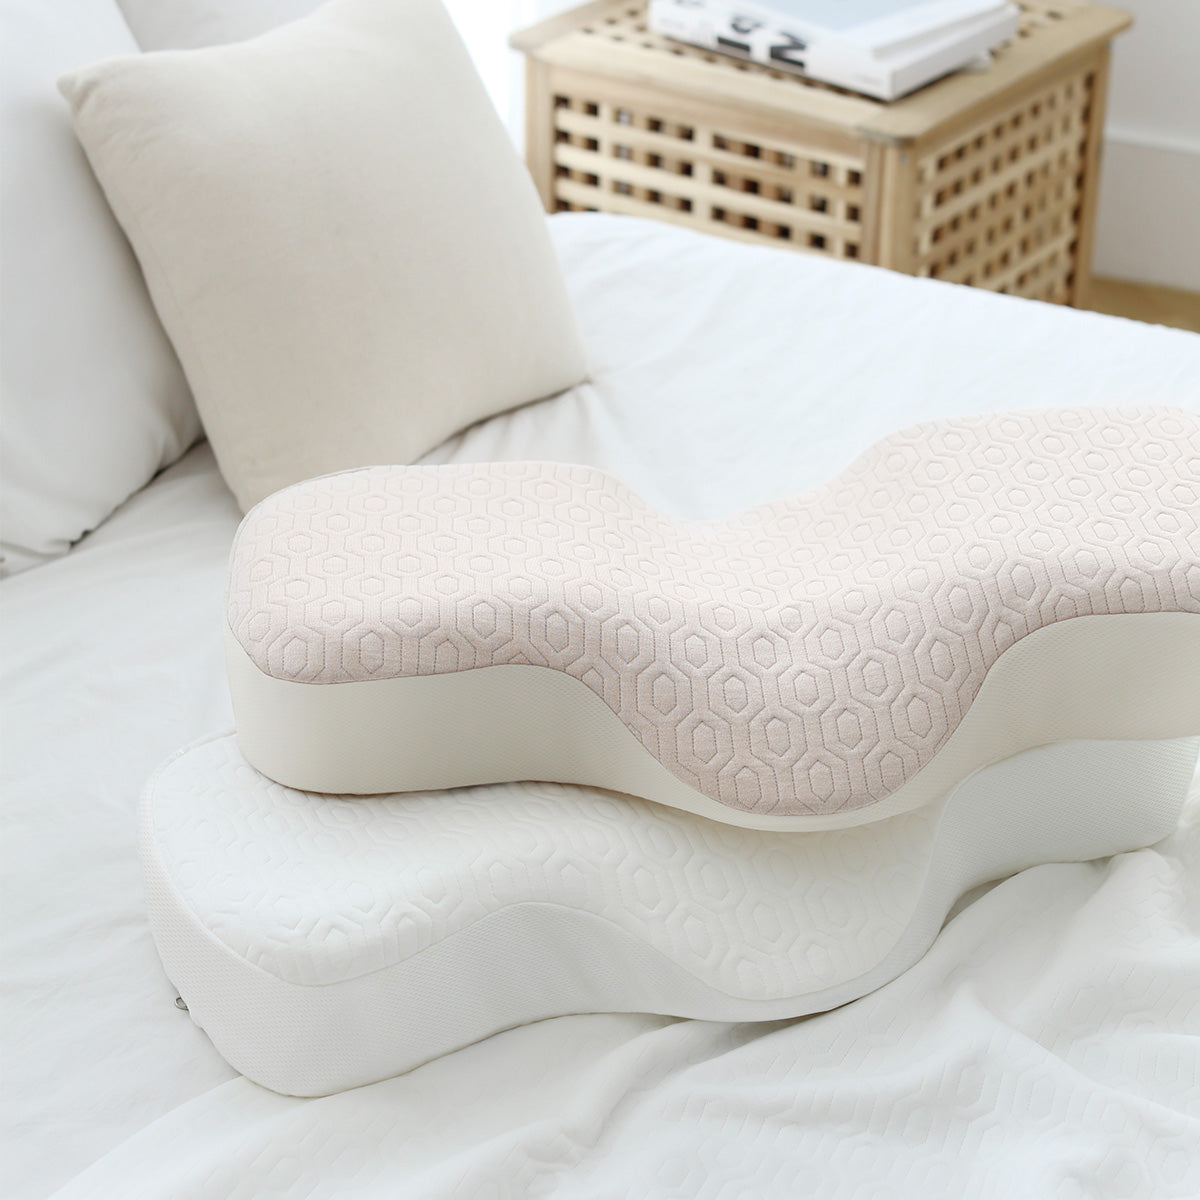 Neck Pillow | ERGOWORKS - EW-DPP-03 - Dual Plus Perfect Sleep Pillow